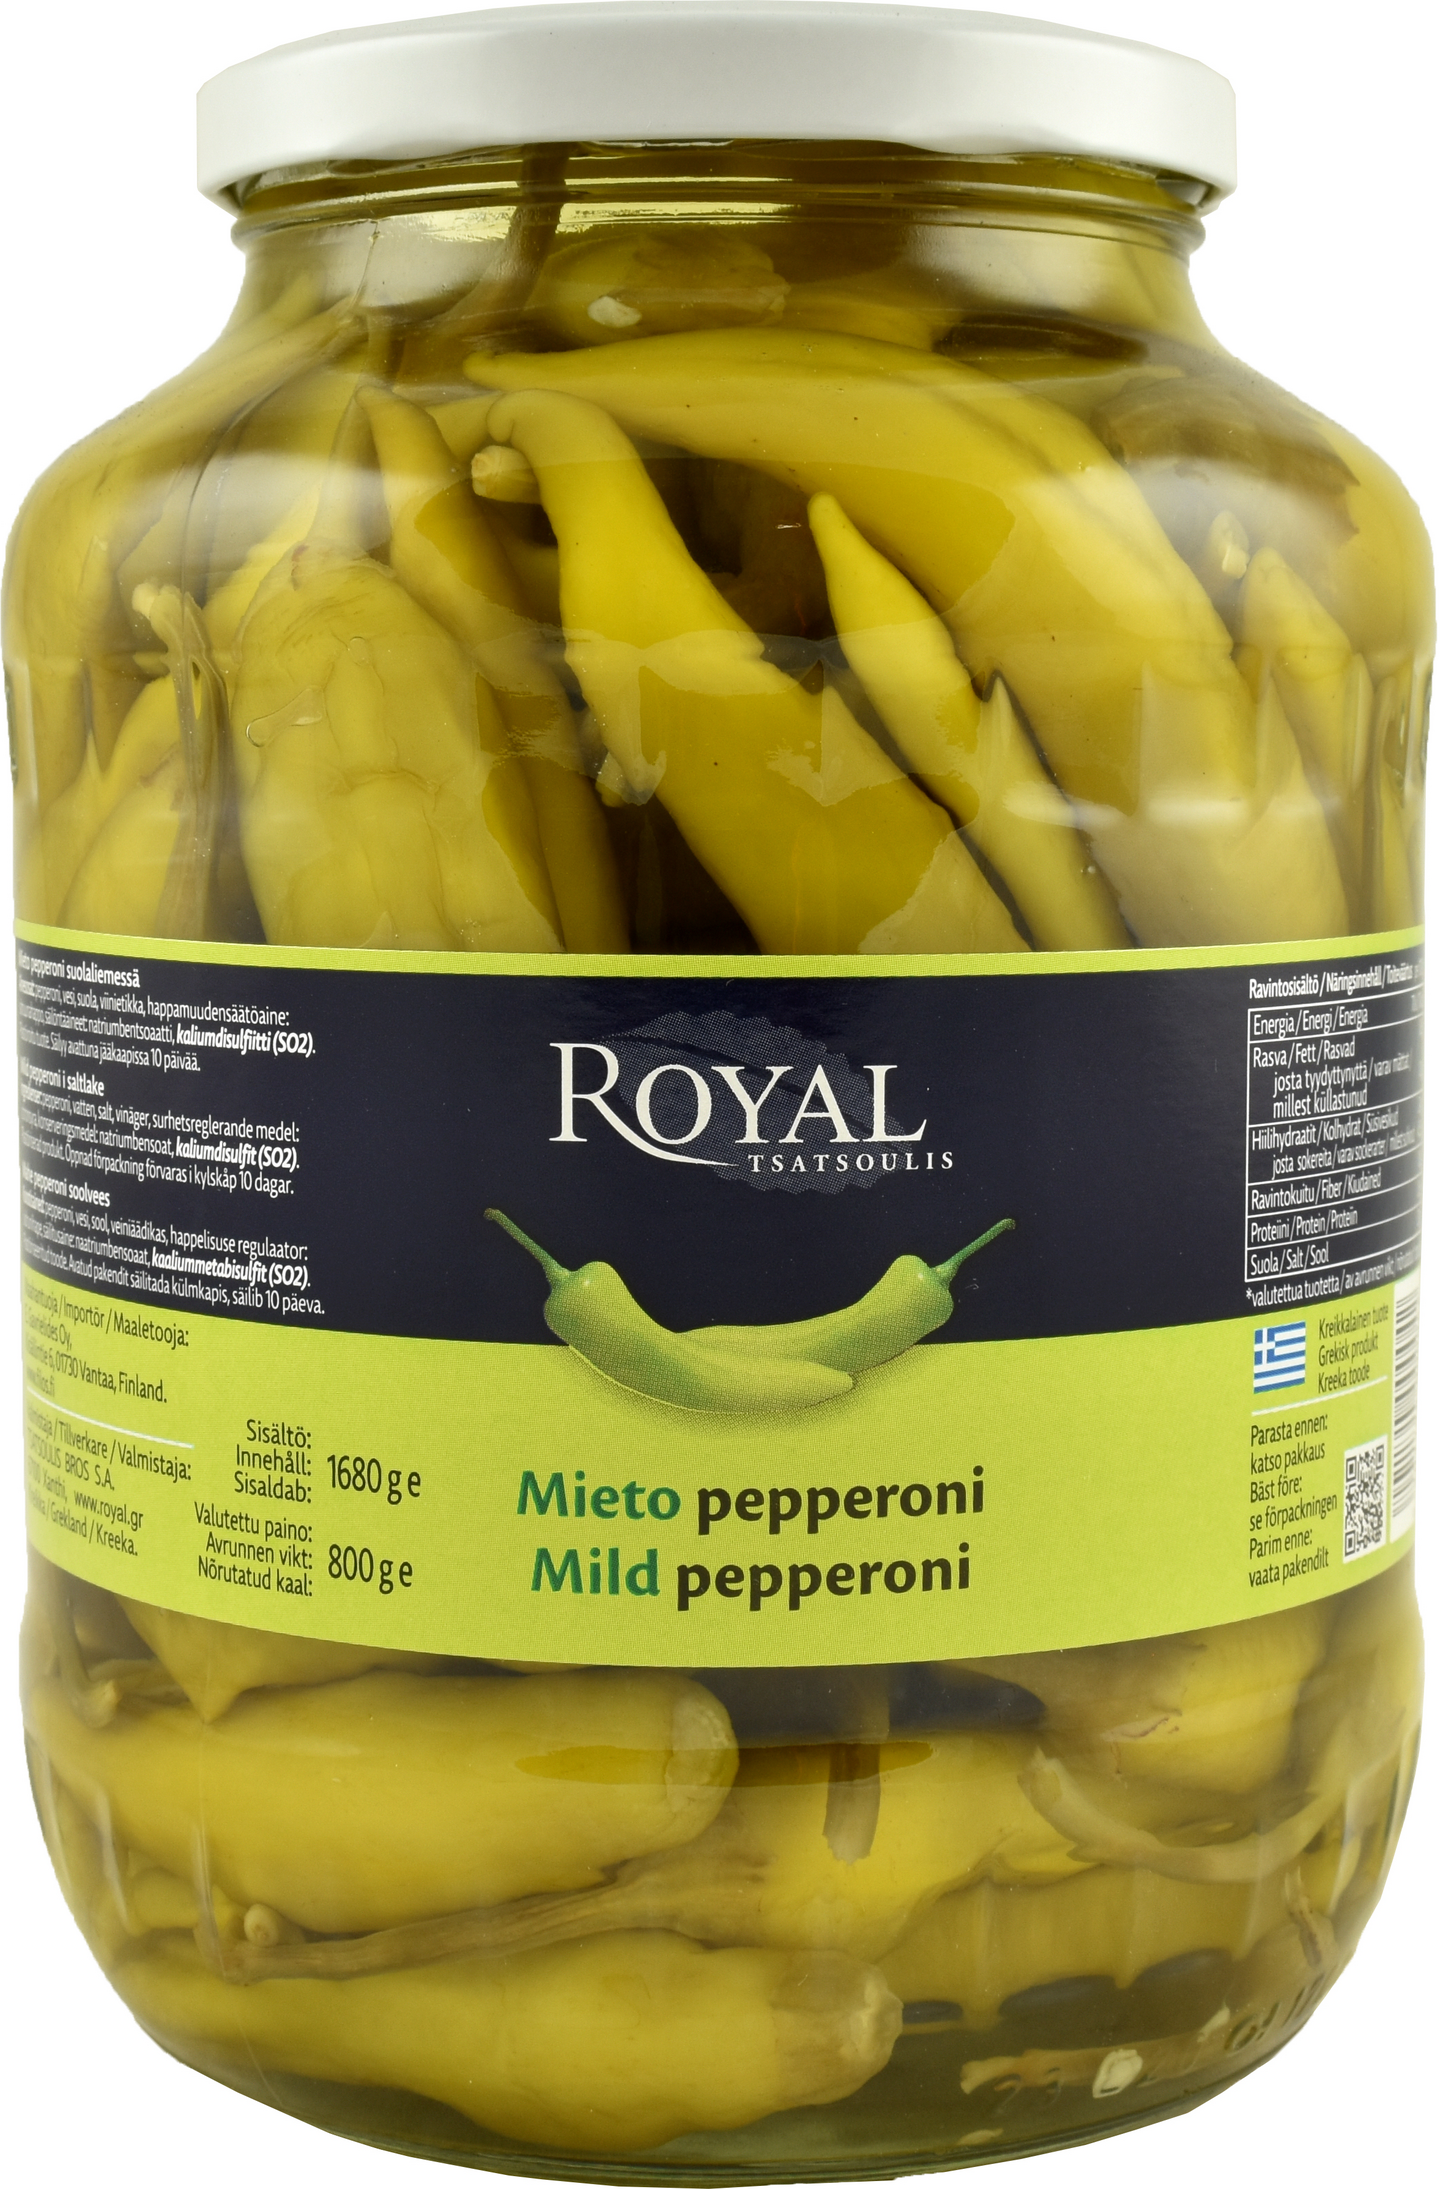 Royal mieto pepperoni 1680/800 g